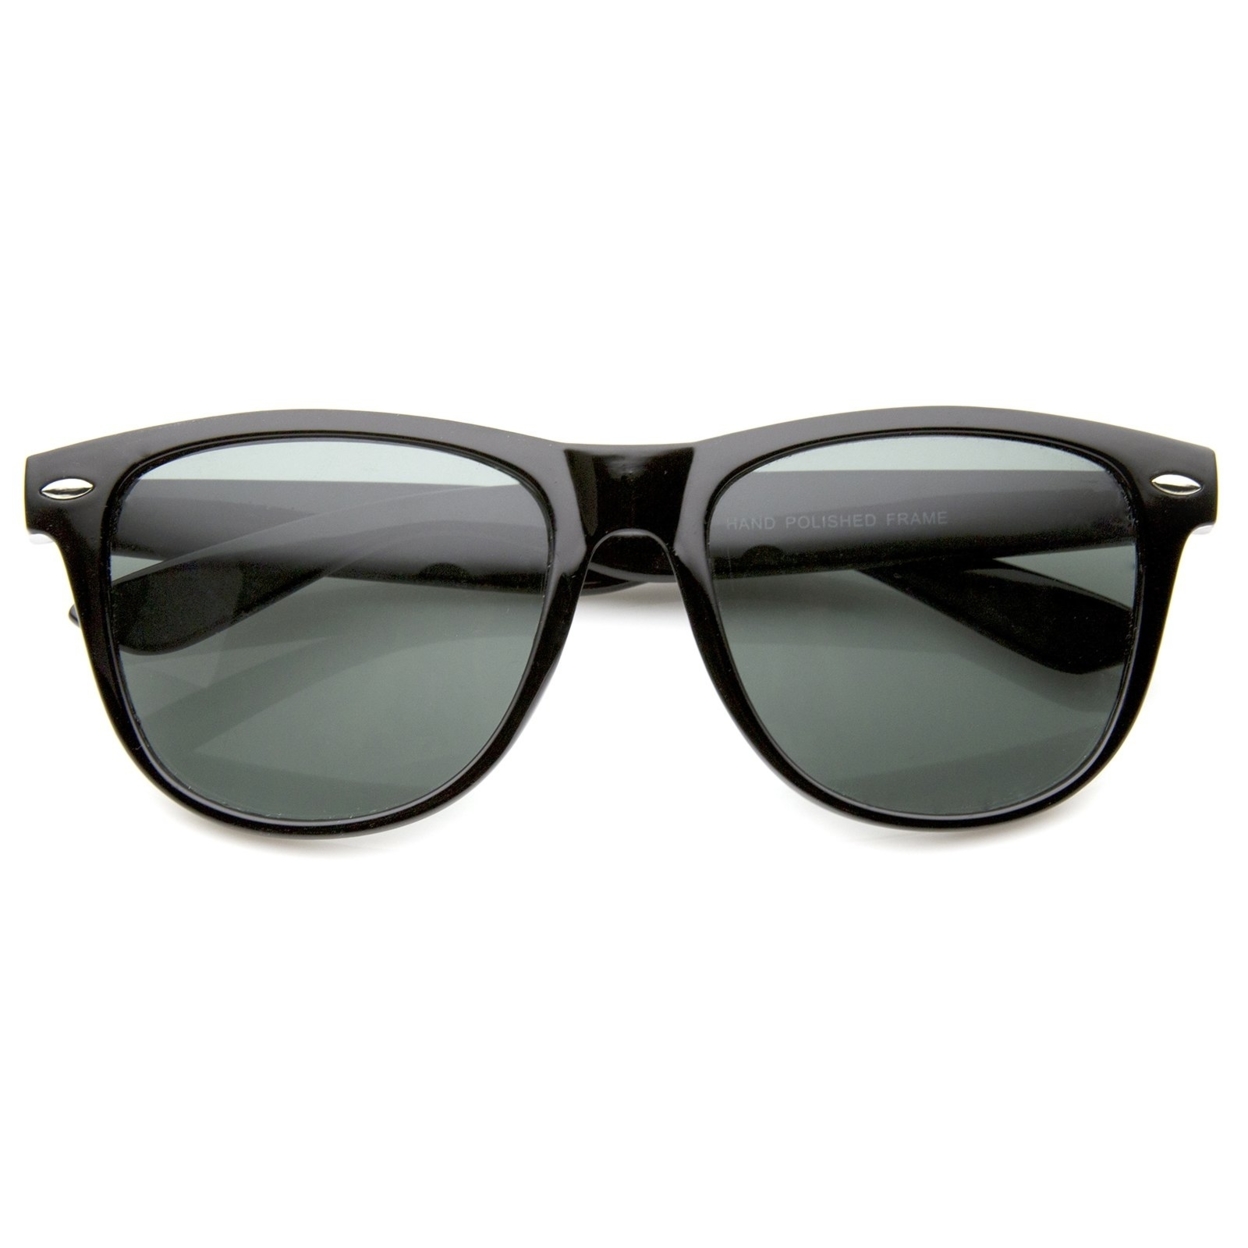 Large Retro Classic Glass Lens Casual Horn Rimmed Sunglasses 54mm - Tortoise / Smoke